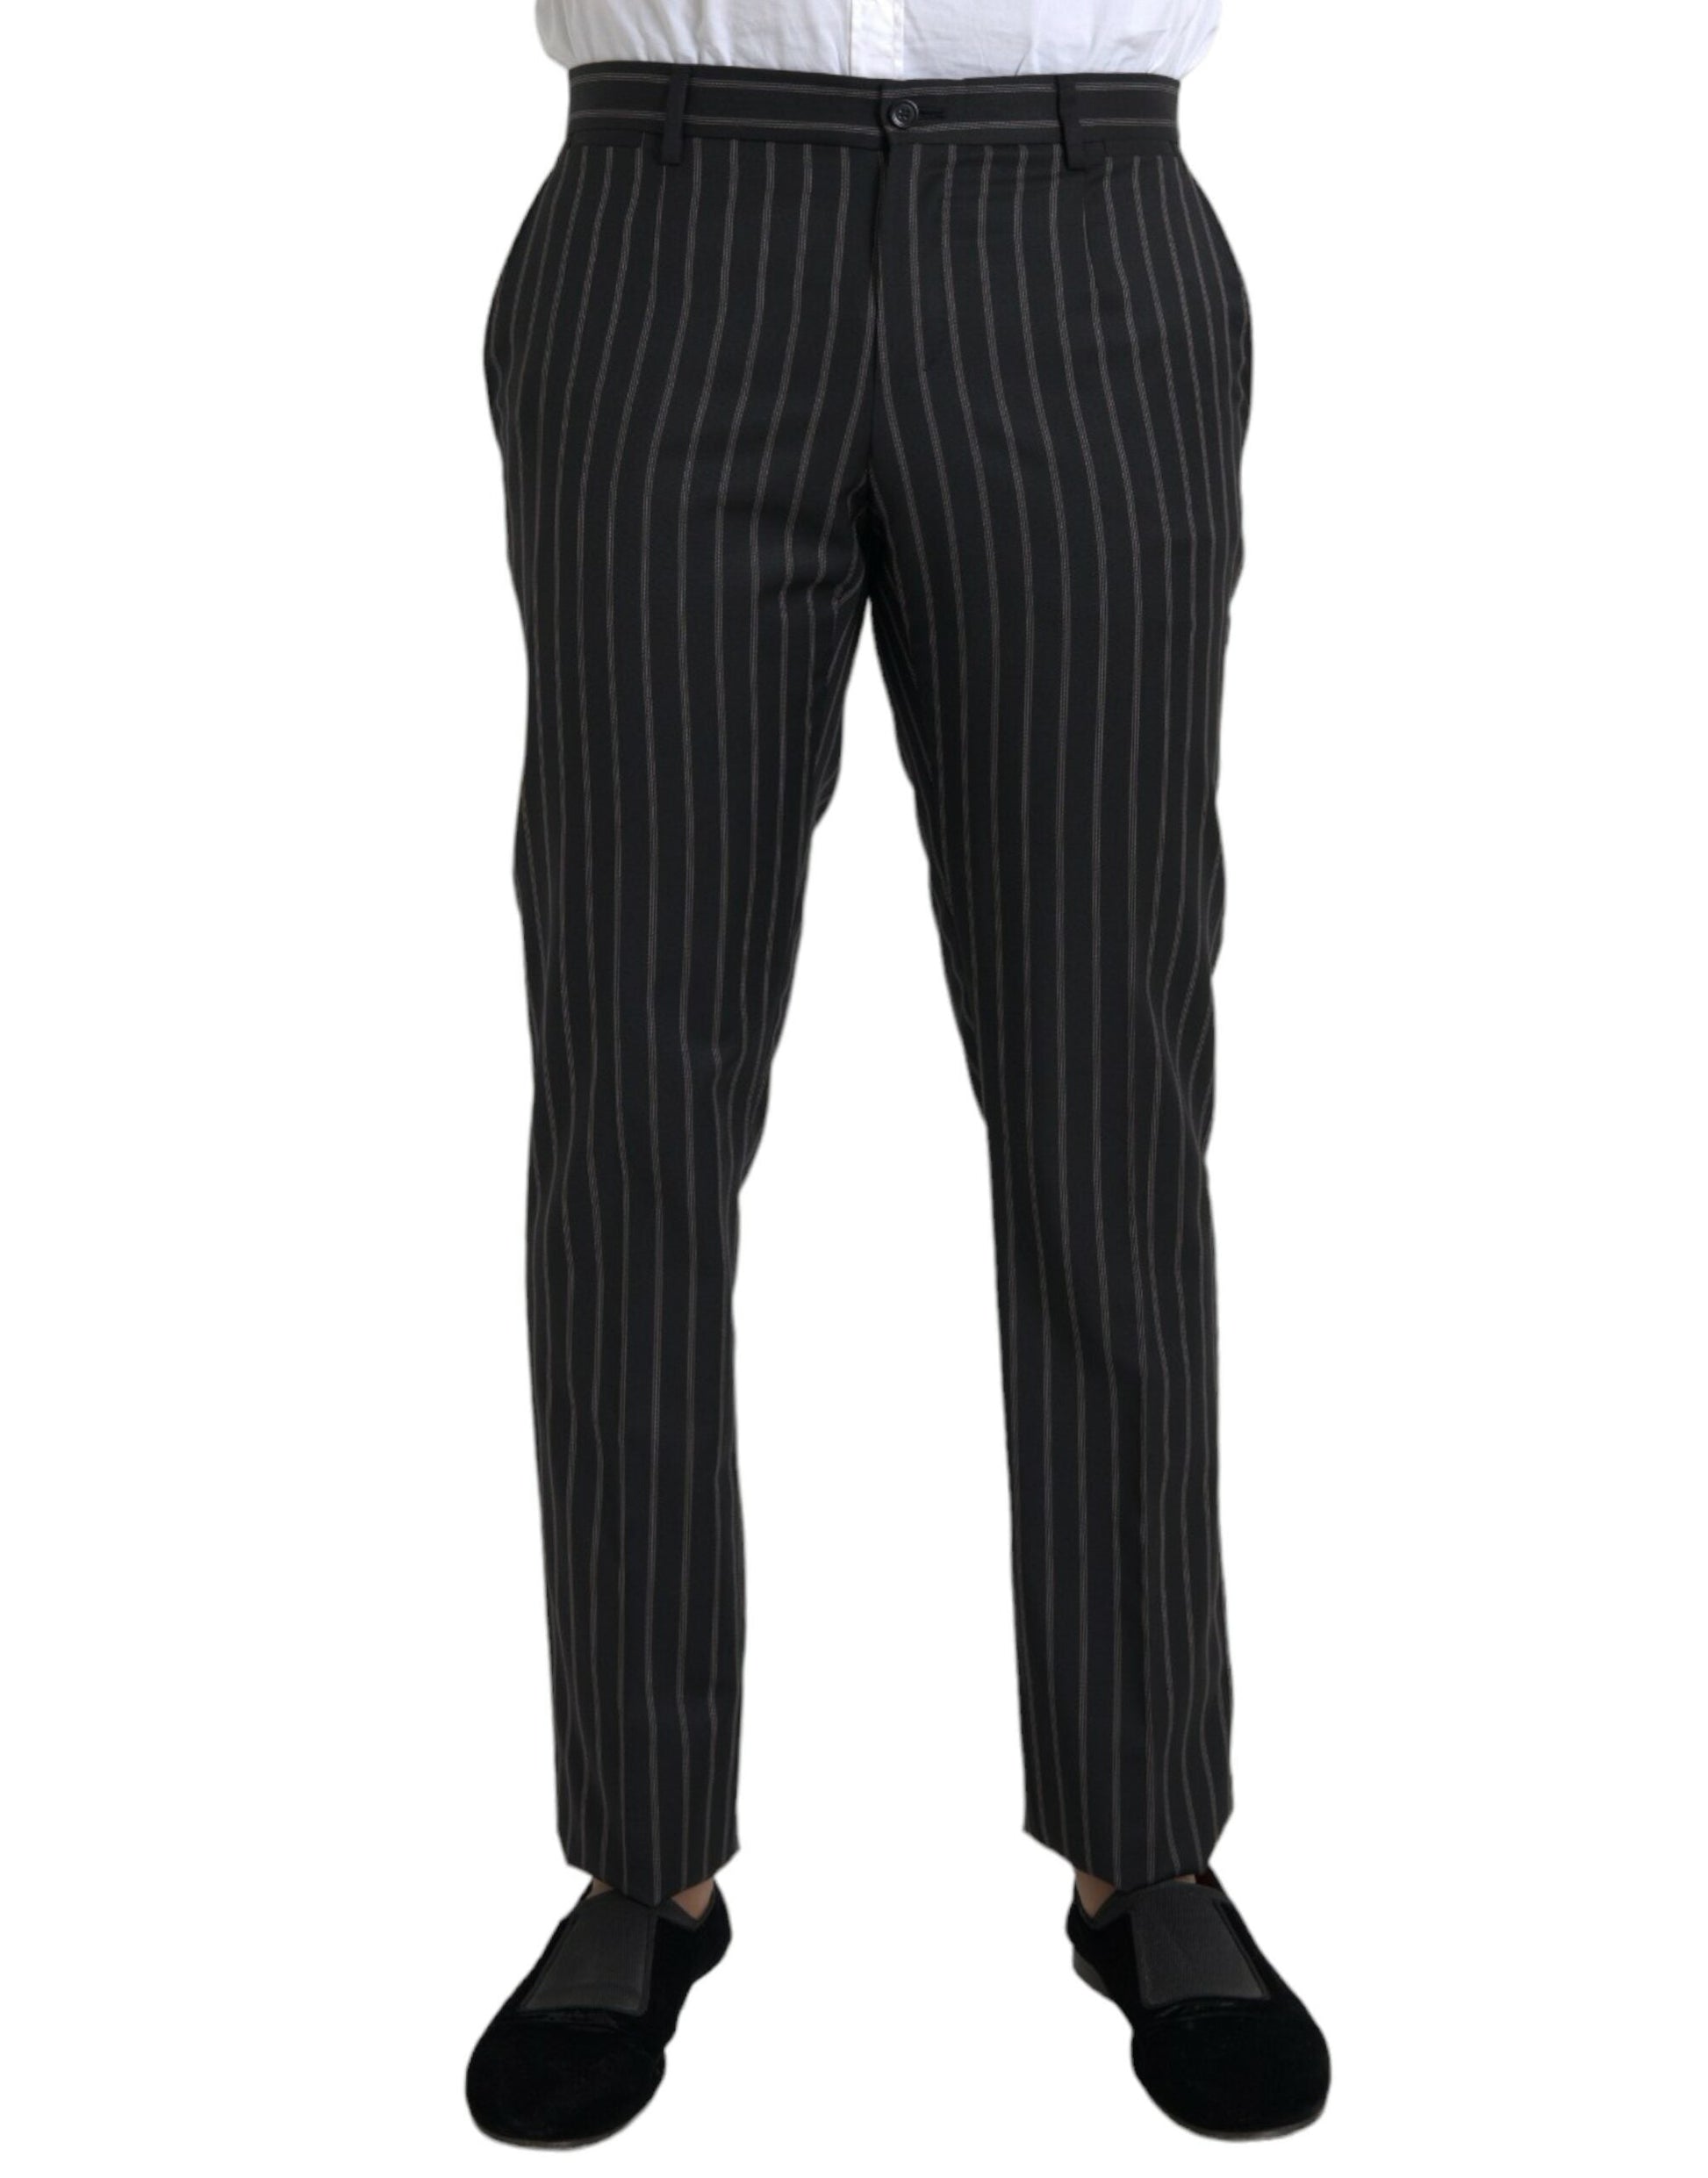 Fashionsarah.com Fashionsarah.com Dolce & Gabbana Black Striped Wool Skinny Dress Pants